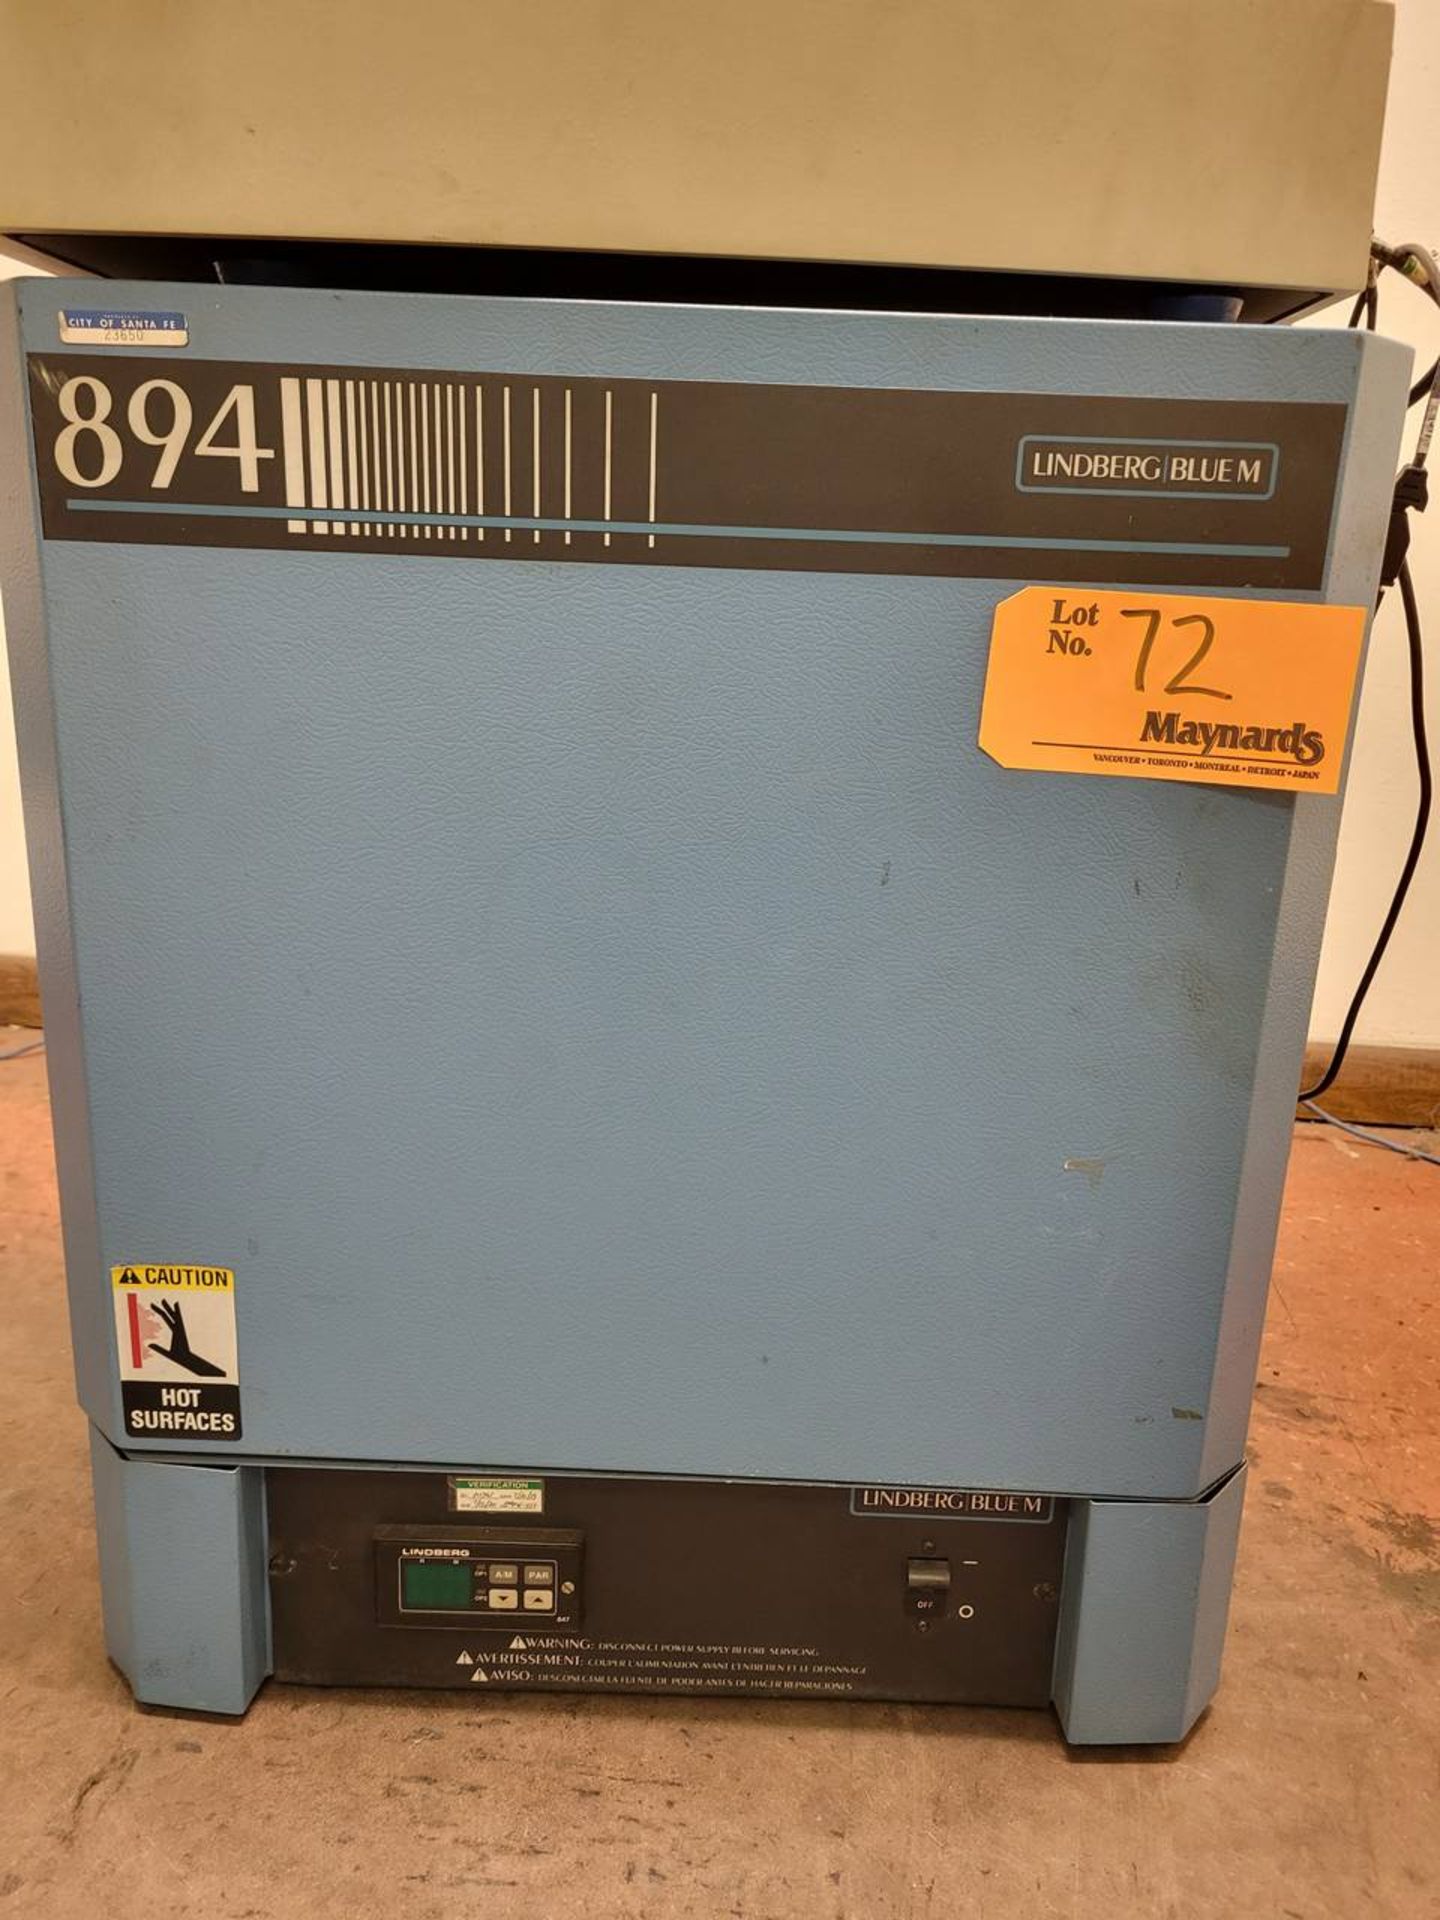 Lindberg / Blue M 894 1100' c electric test oven